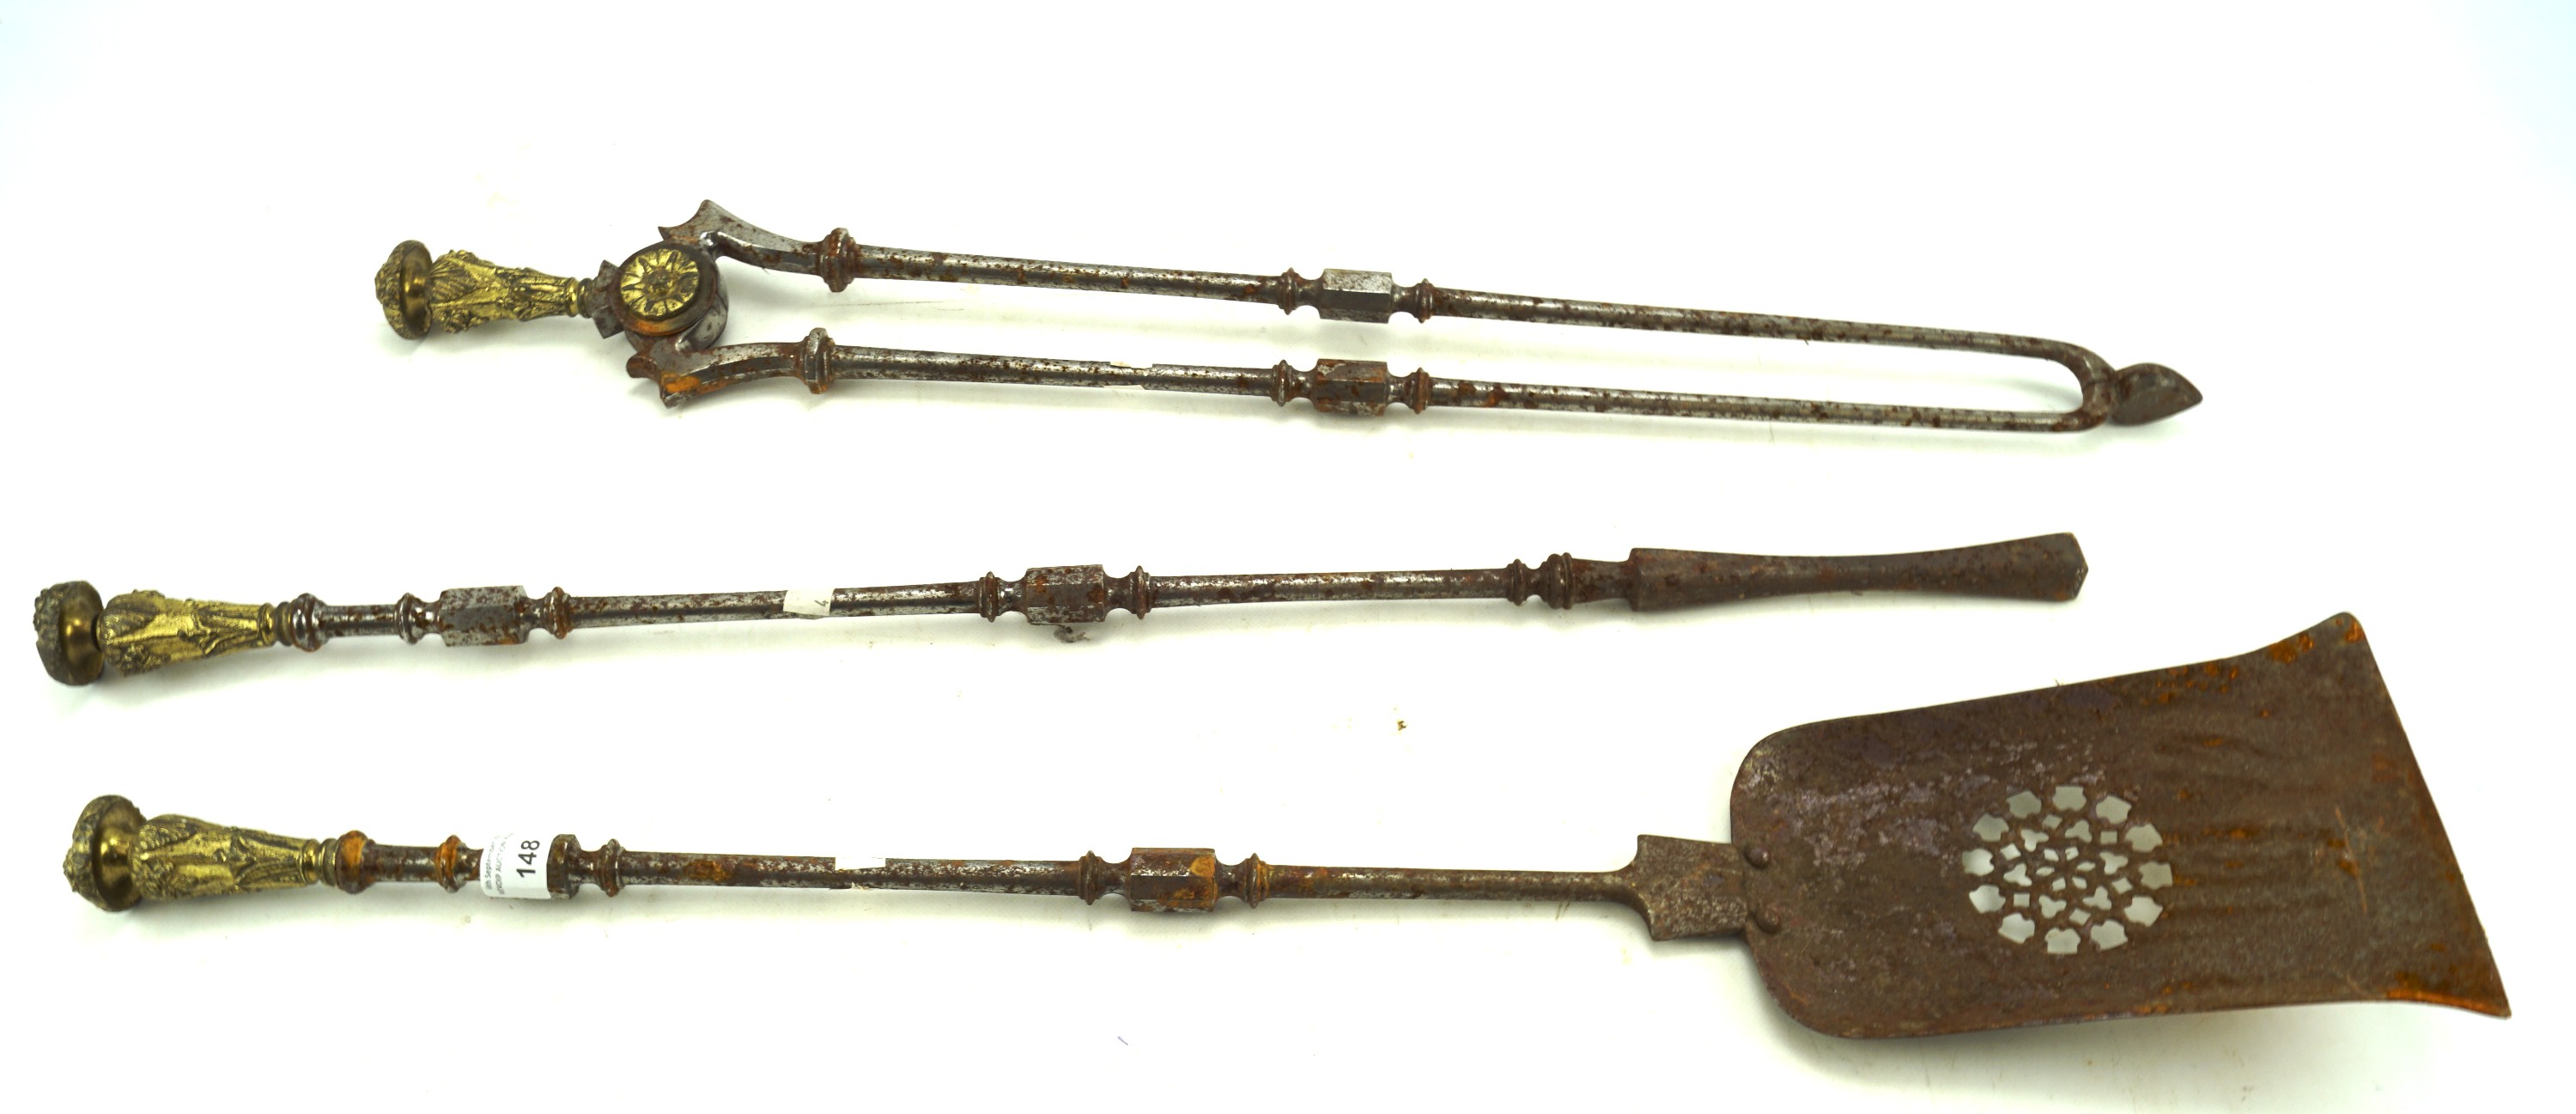 A 19th century fireside irons set.